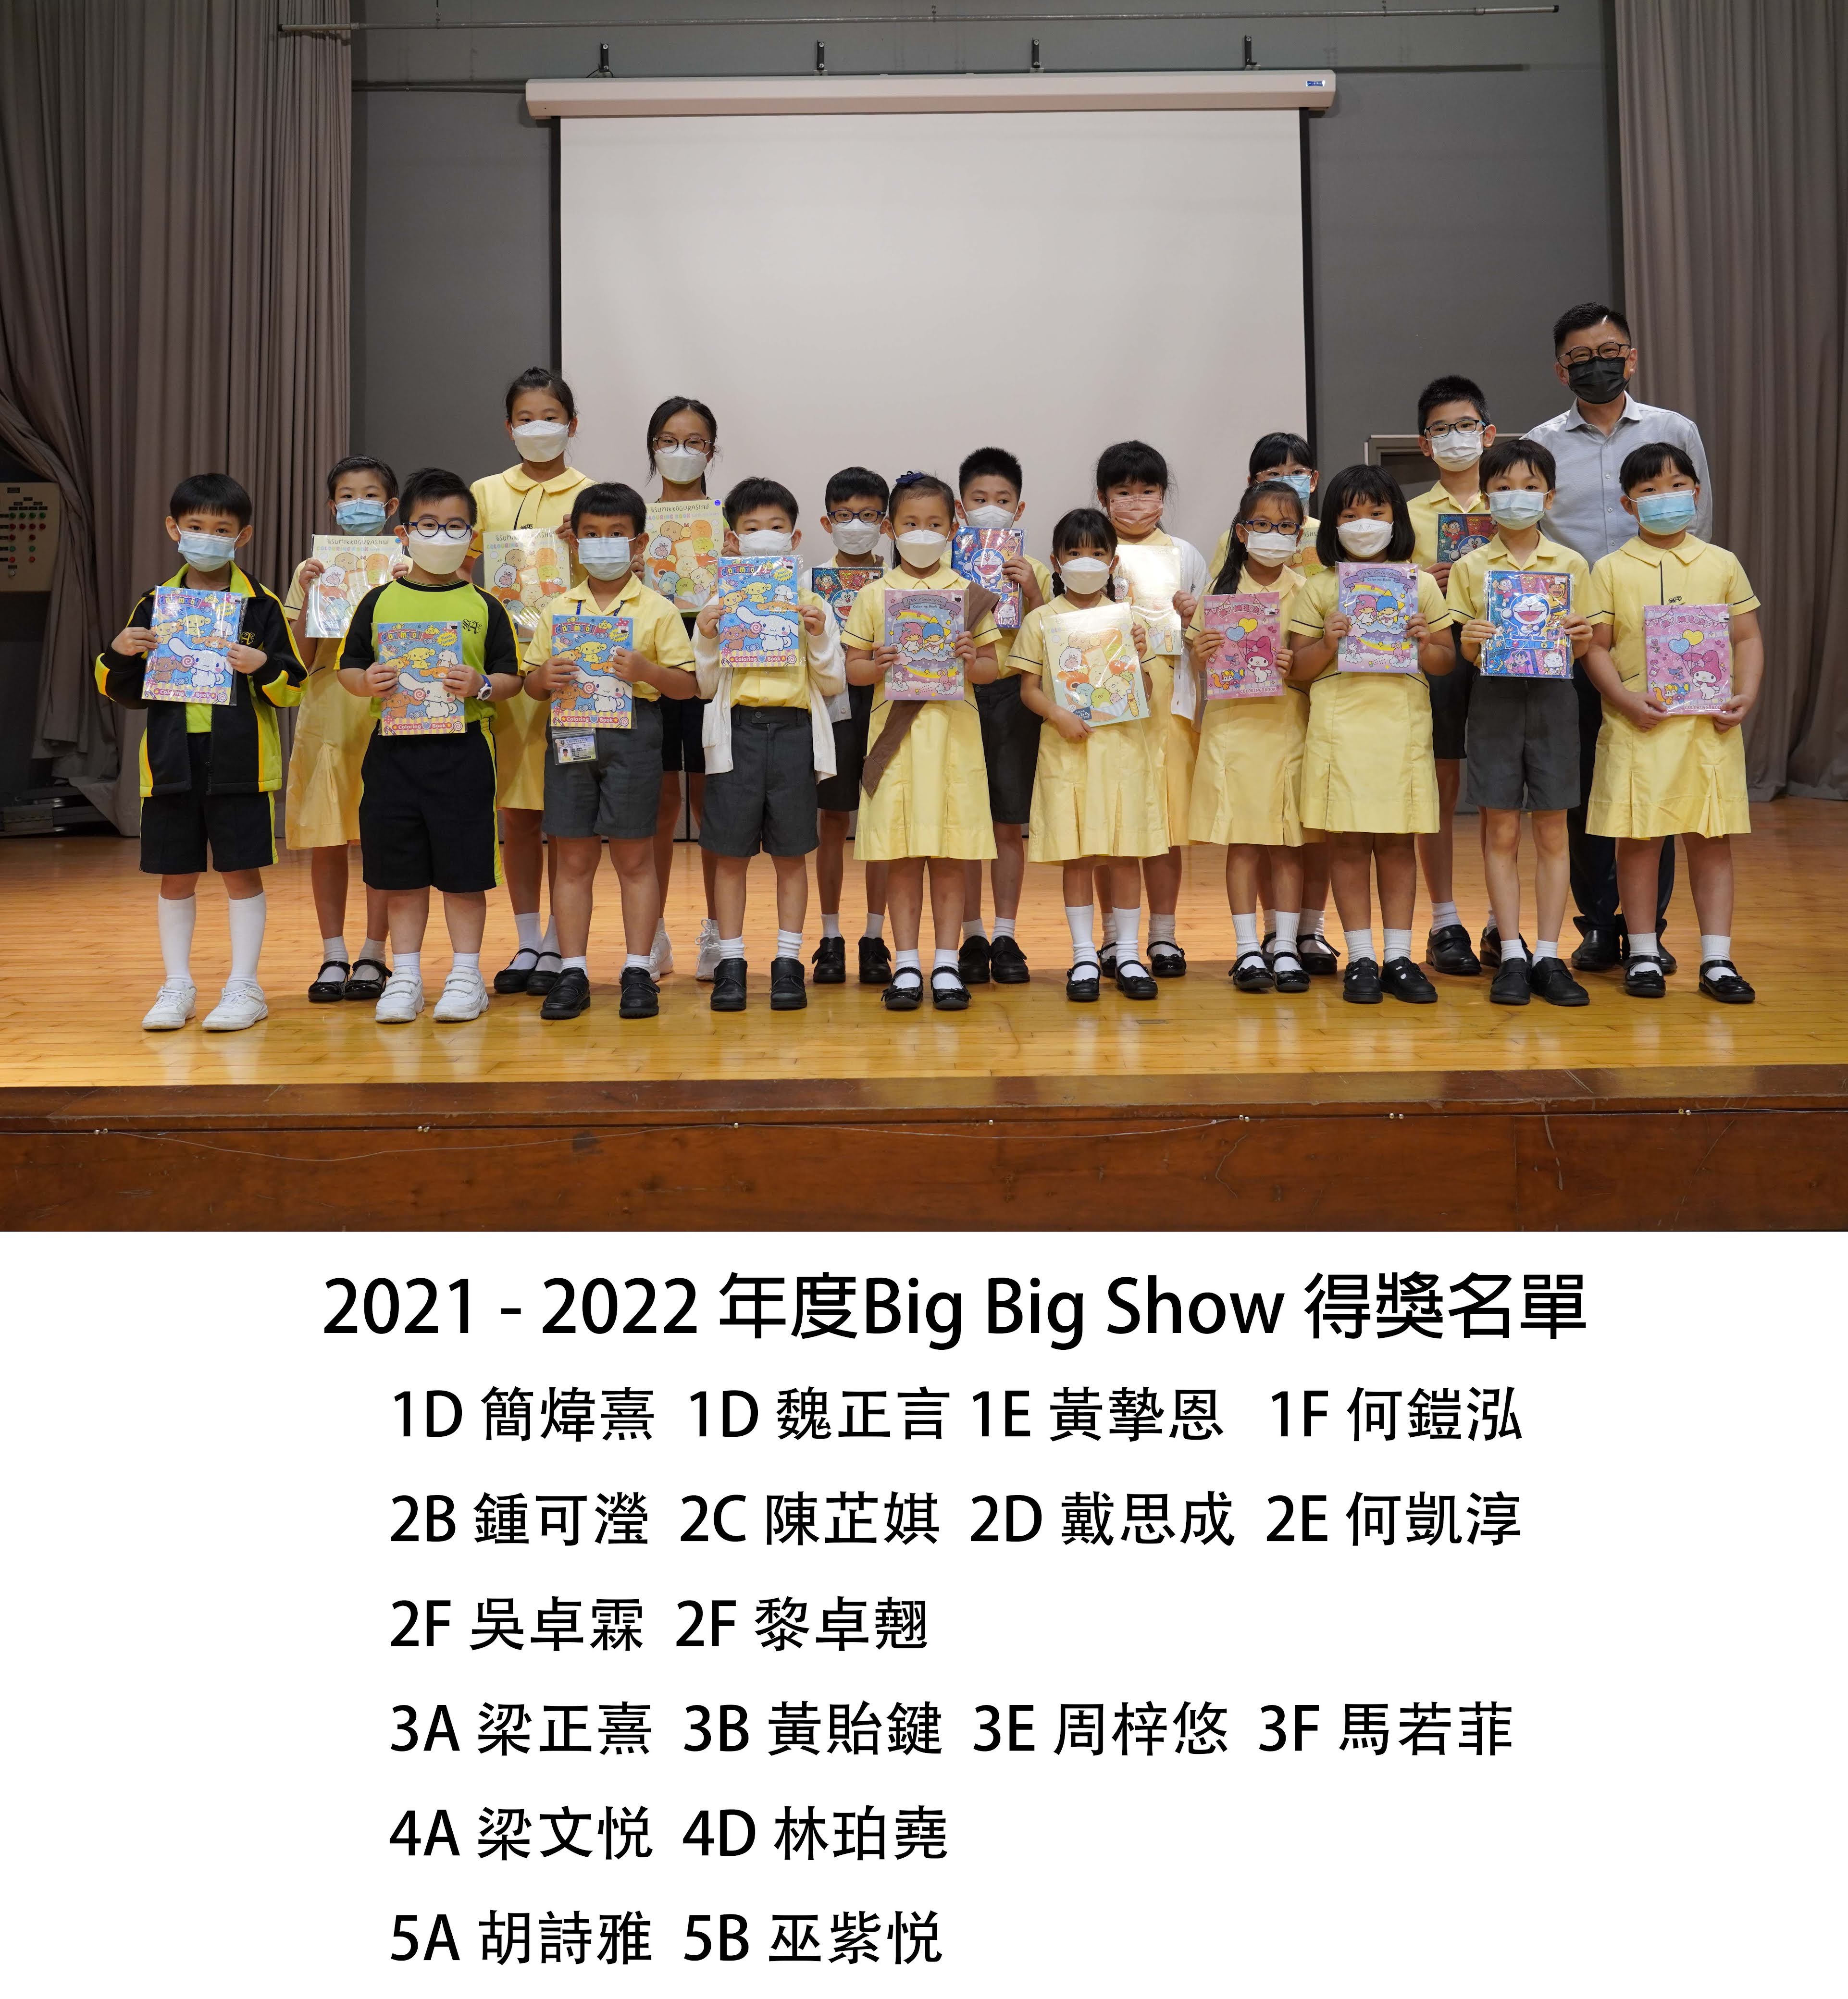 早會頒獎 2021 - 2022 年度Big Big Show 獎項 